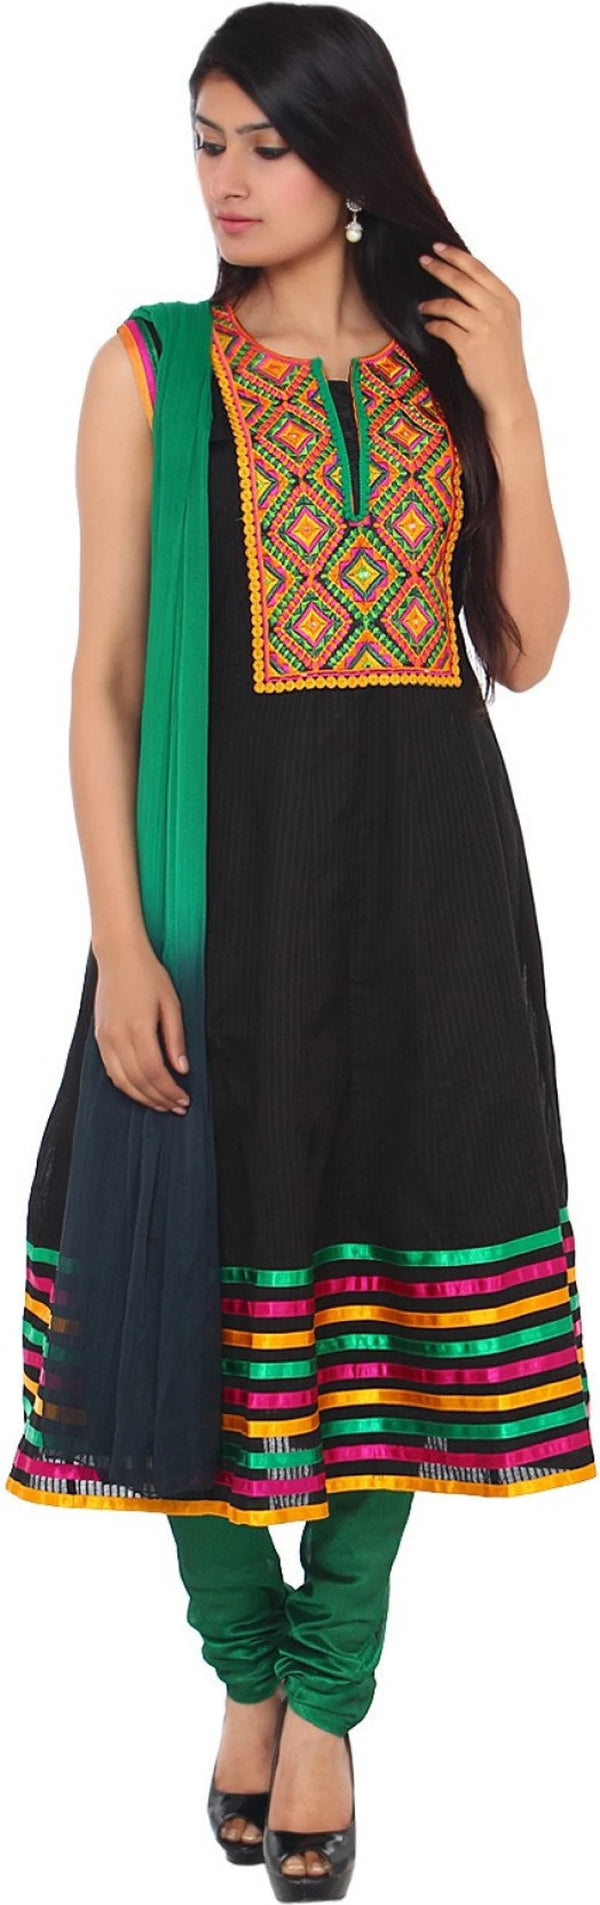 Black Salwar Kameez , Readymade Salwar Kameez , Indian Dresses for Women , Black Embroidered Dress , Chest - 38 Inches FREE DELIVERY